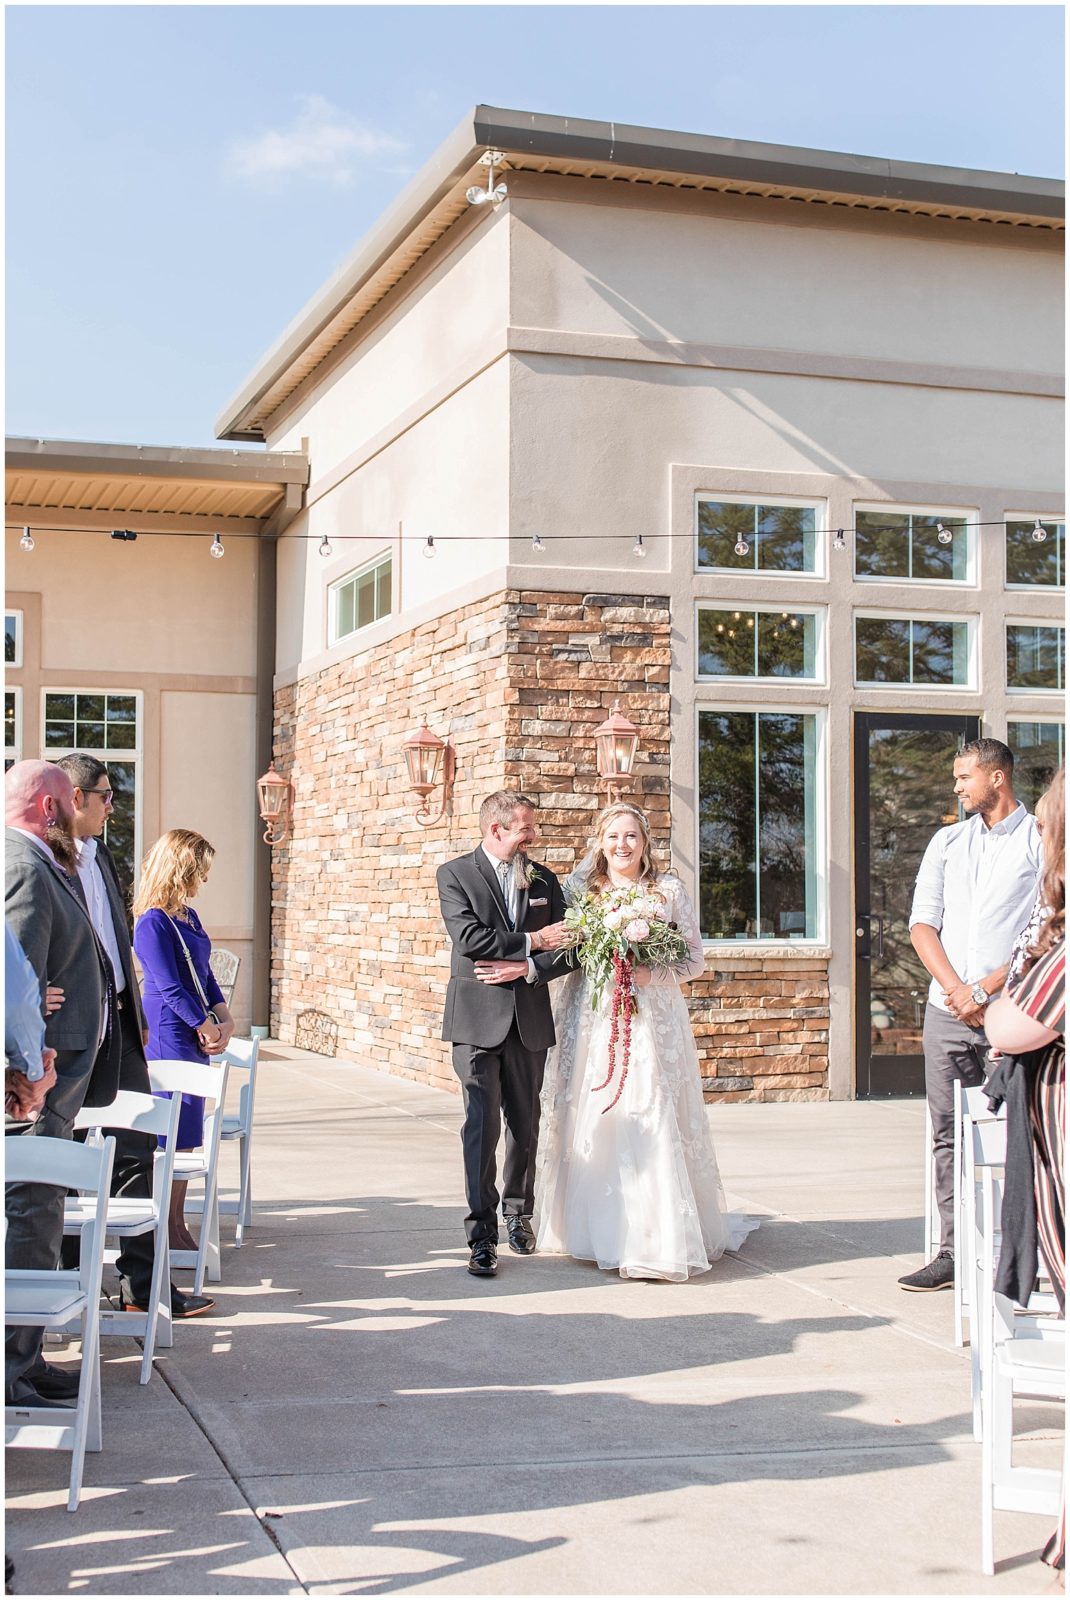 Ken Caryl Vista wedding ceremony shot by Jessica Brees, Littleton Wedding Photographer and Videographer